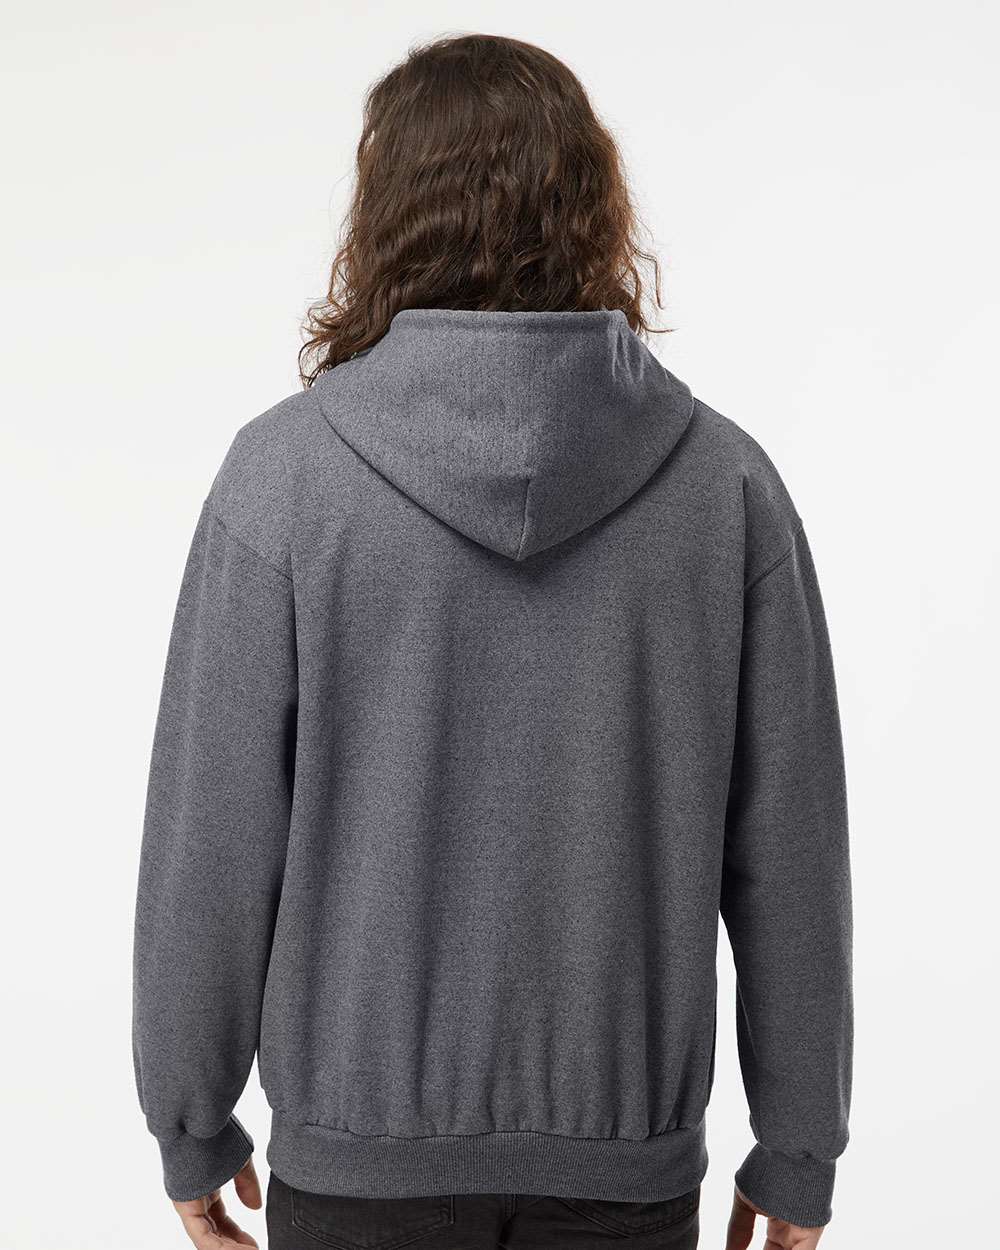 King Fashion Full-Zip Hooded Sweatshirt KF9017 #colormdl_Charcoal Mix